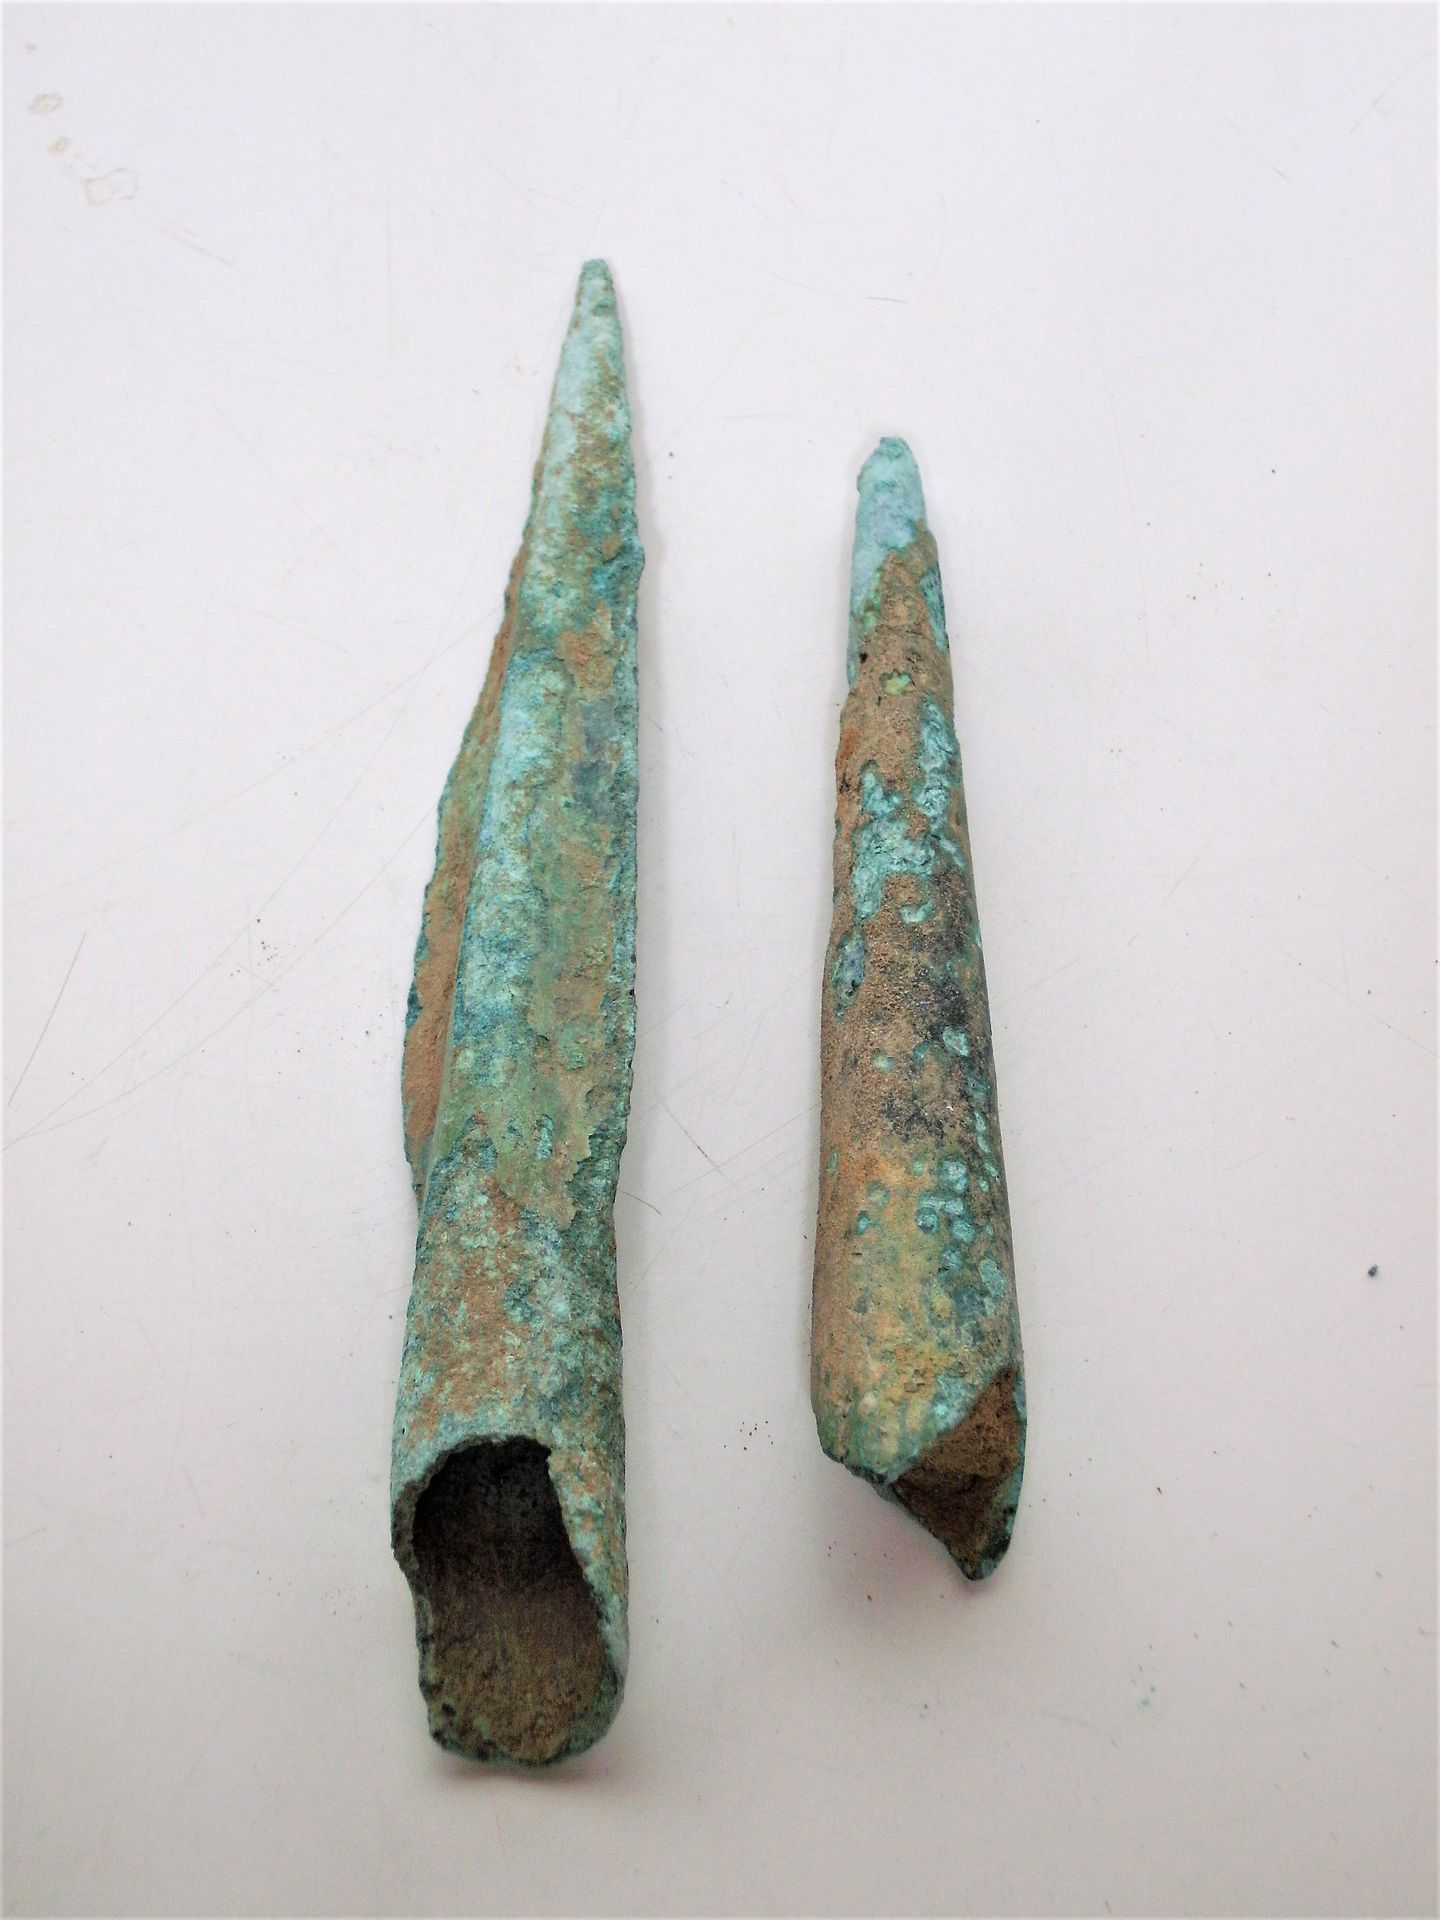 Vietnam Culture Dongson 越南

 东山文化

 两件有出土铜锈的青铜矛头

 

 尺寸 :

 18 x 14厘米

 

东山是印度&hellip;